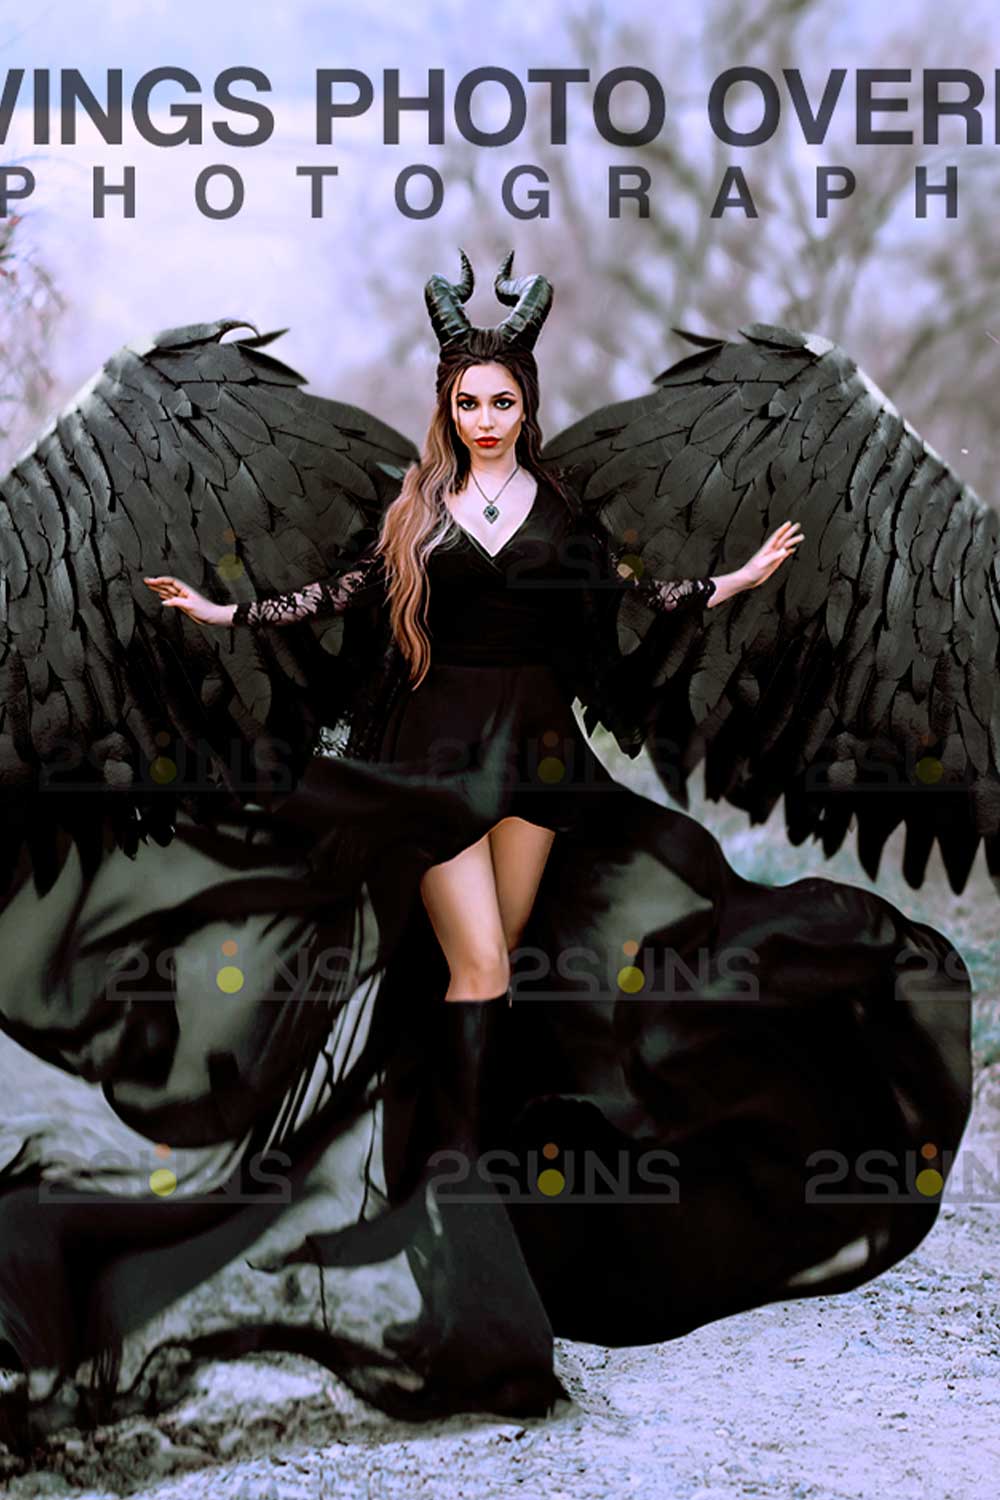 Realistic White Black Gold Angel Wings Photoshop Overlays pinterest image.